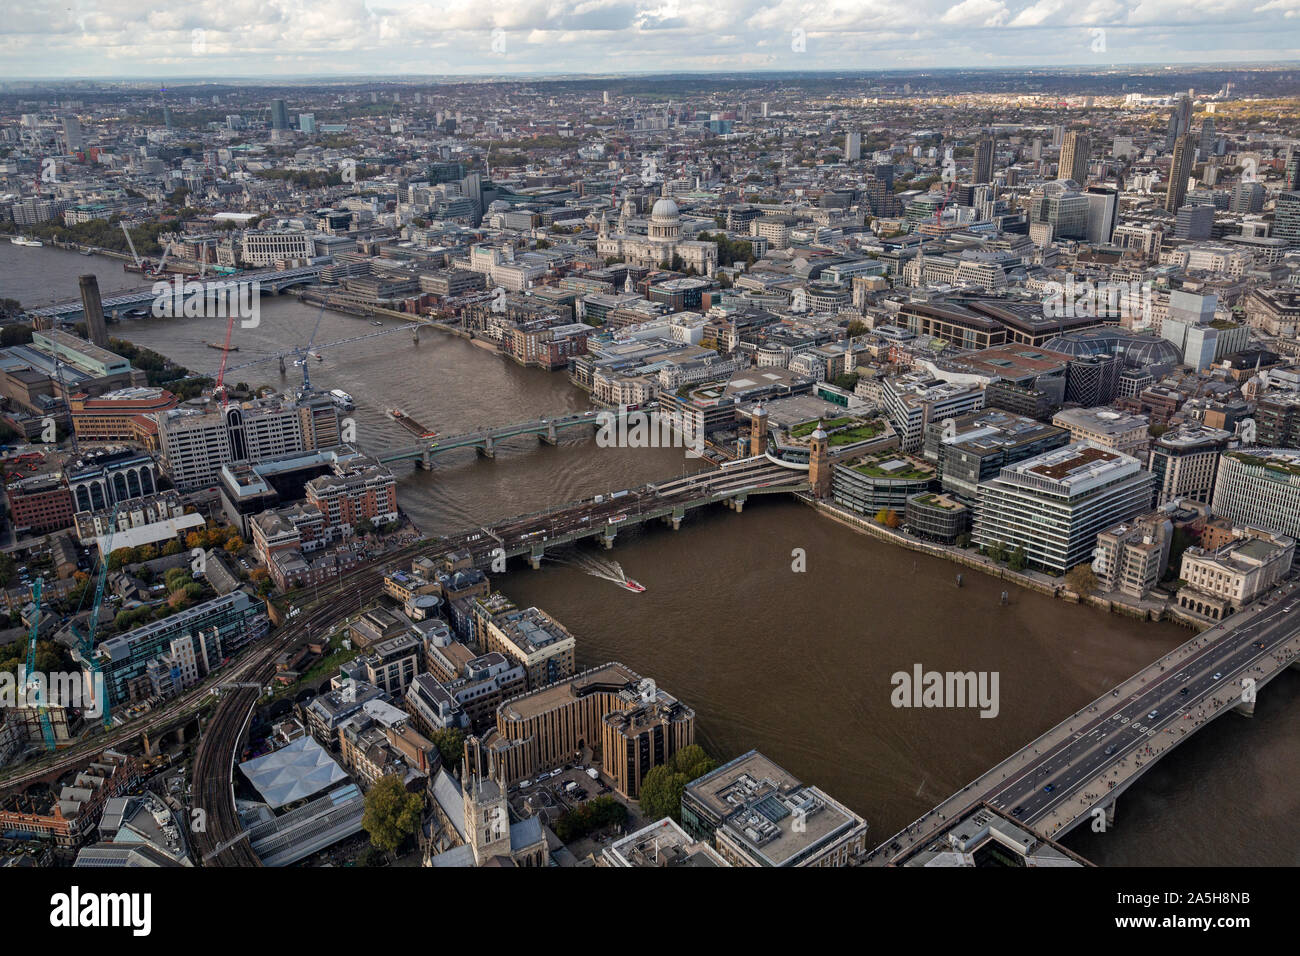 An aerial view looking down on the River Thames in London, with London Bridge, Southwark Bridge, Millennium Bridge, and Blackfriars Bridge. Stock Photo